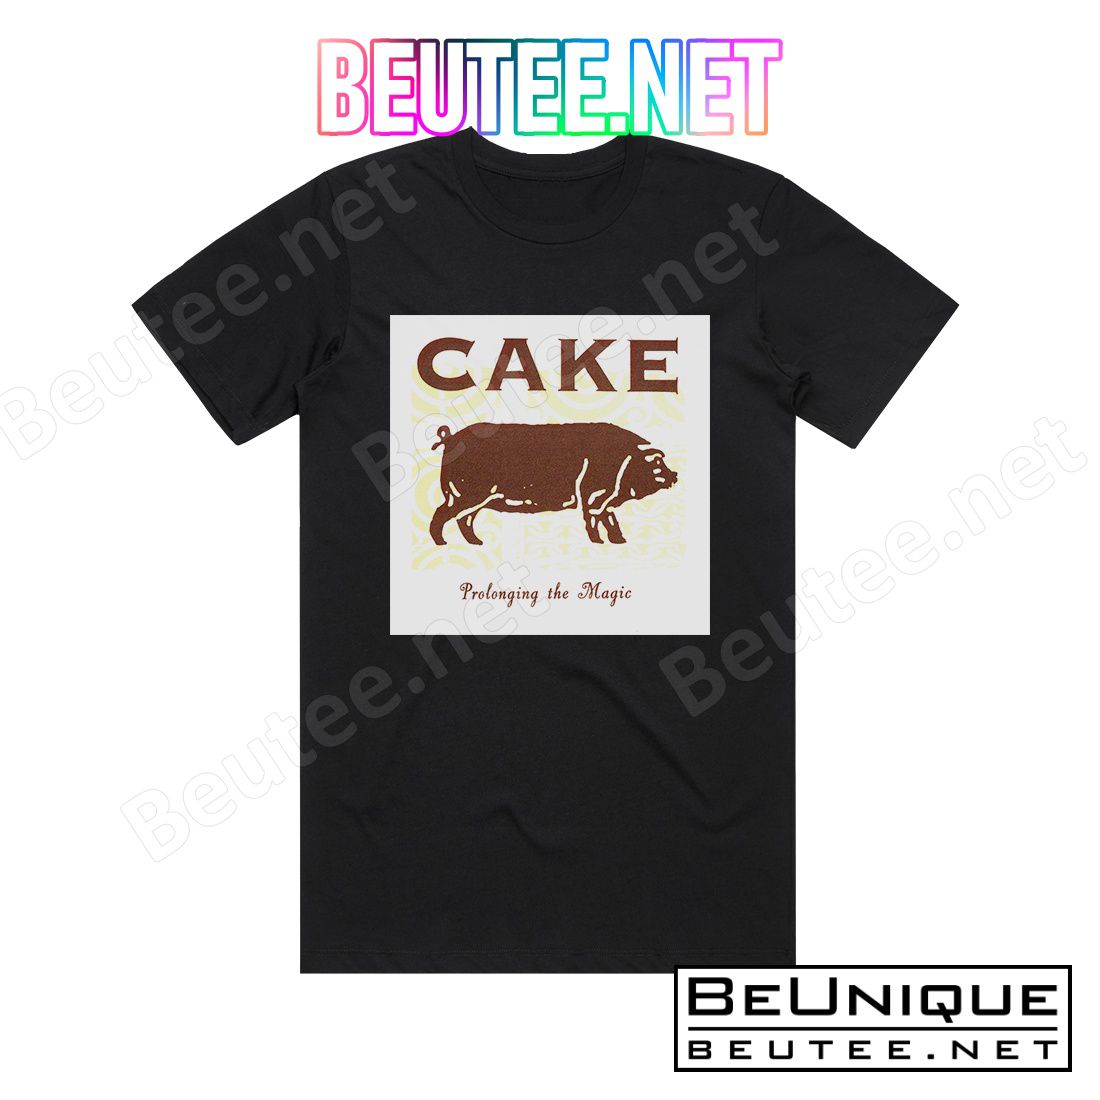 Cake Prolonging The Magic 1 Album Cover T-Shirt